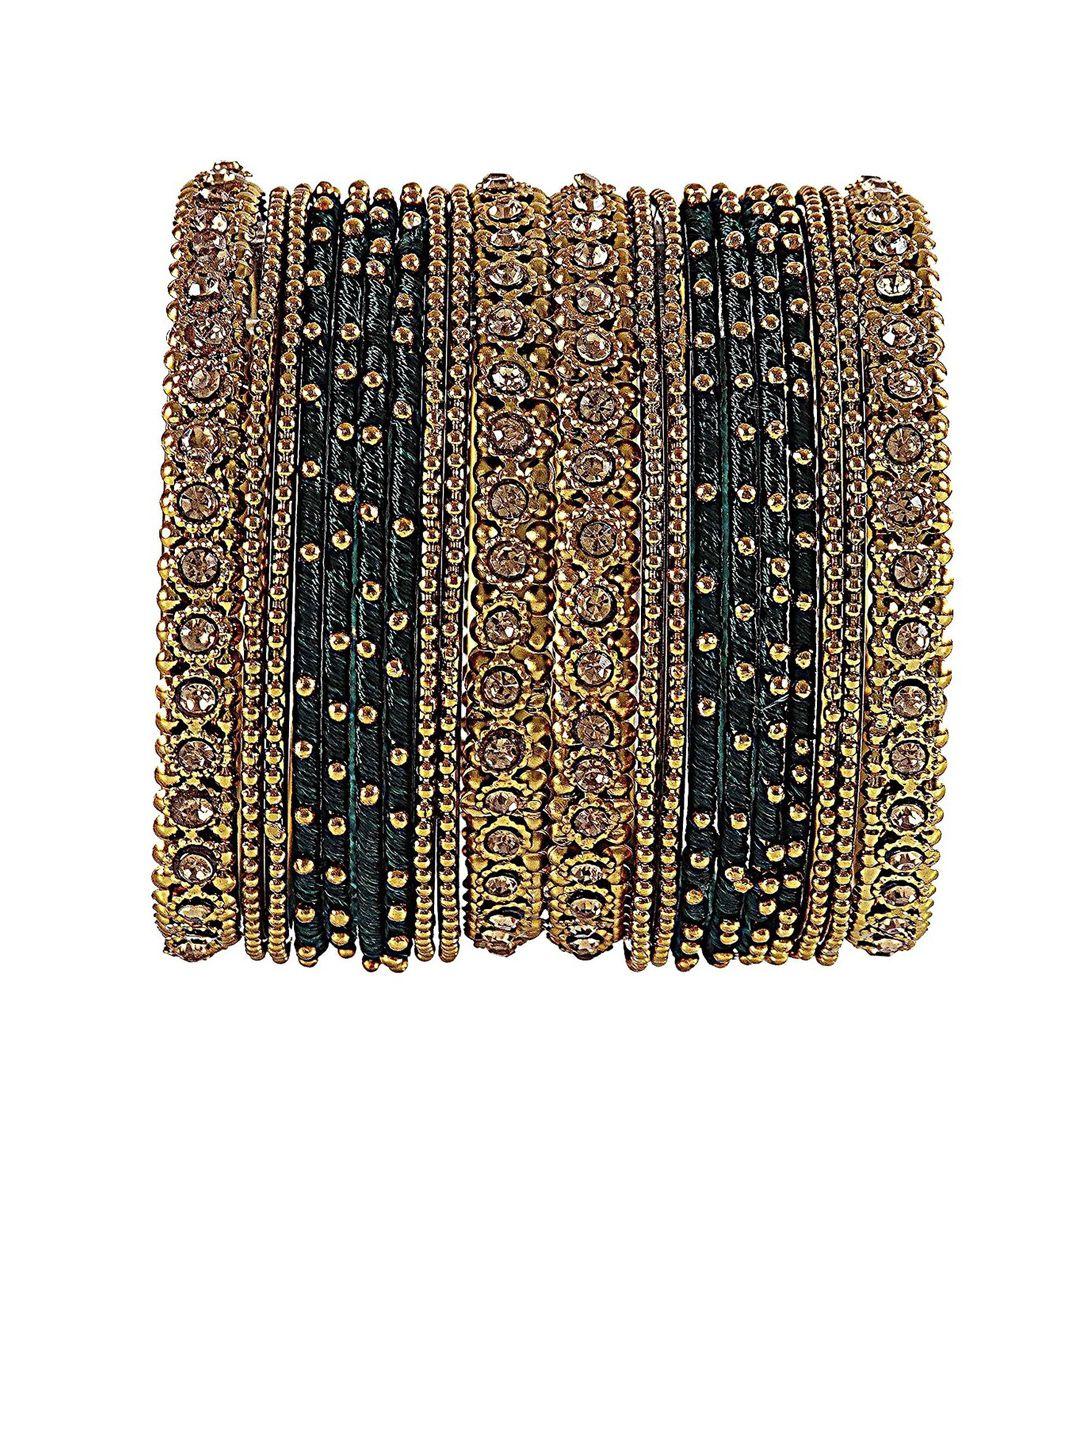 nmii set of 20 zircon stone studded silk thread antique bangles